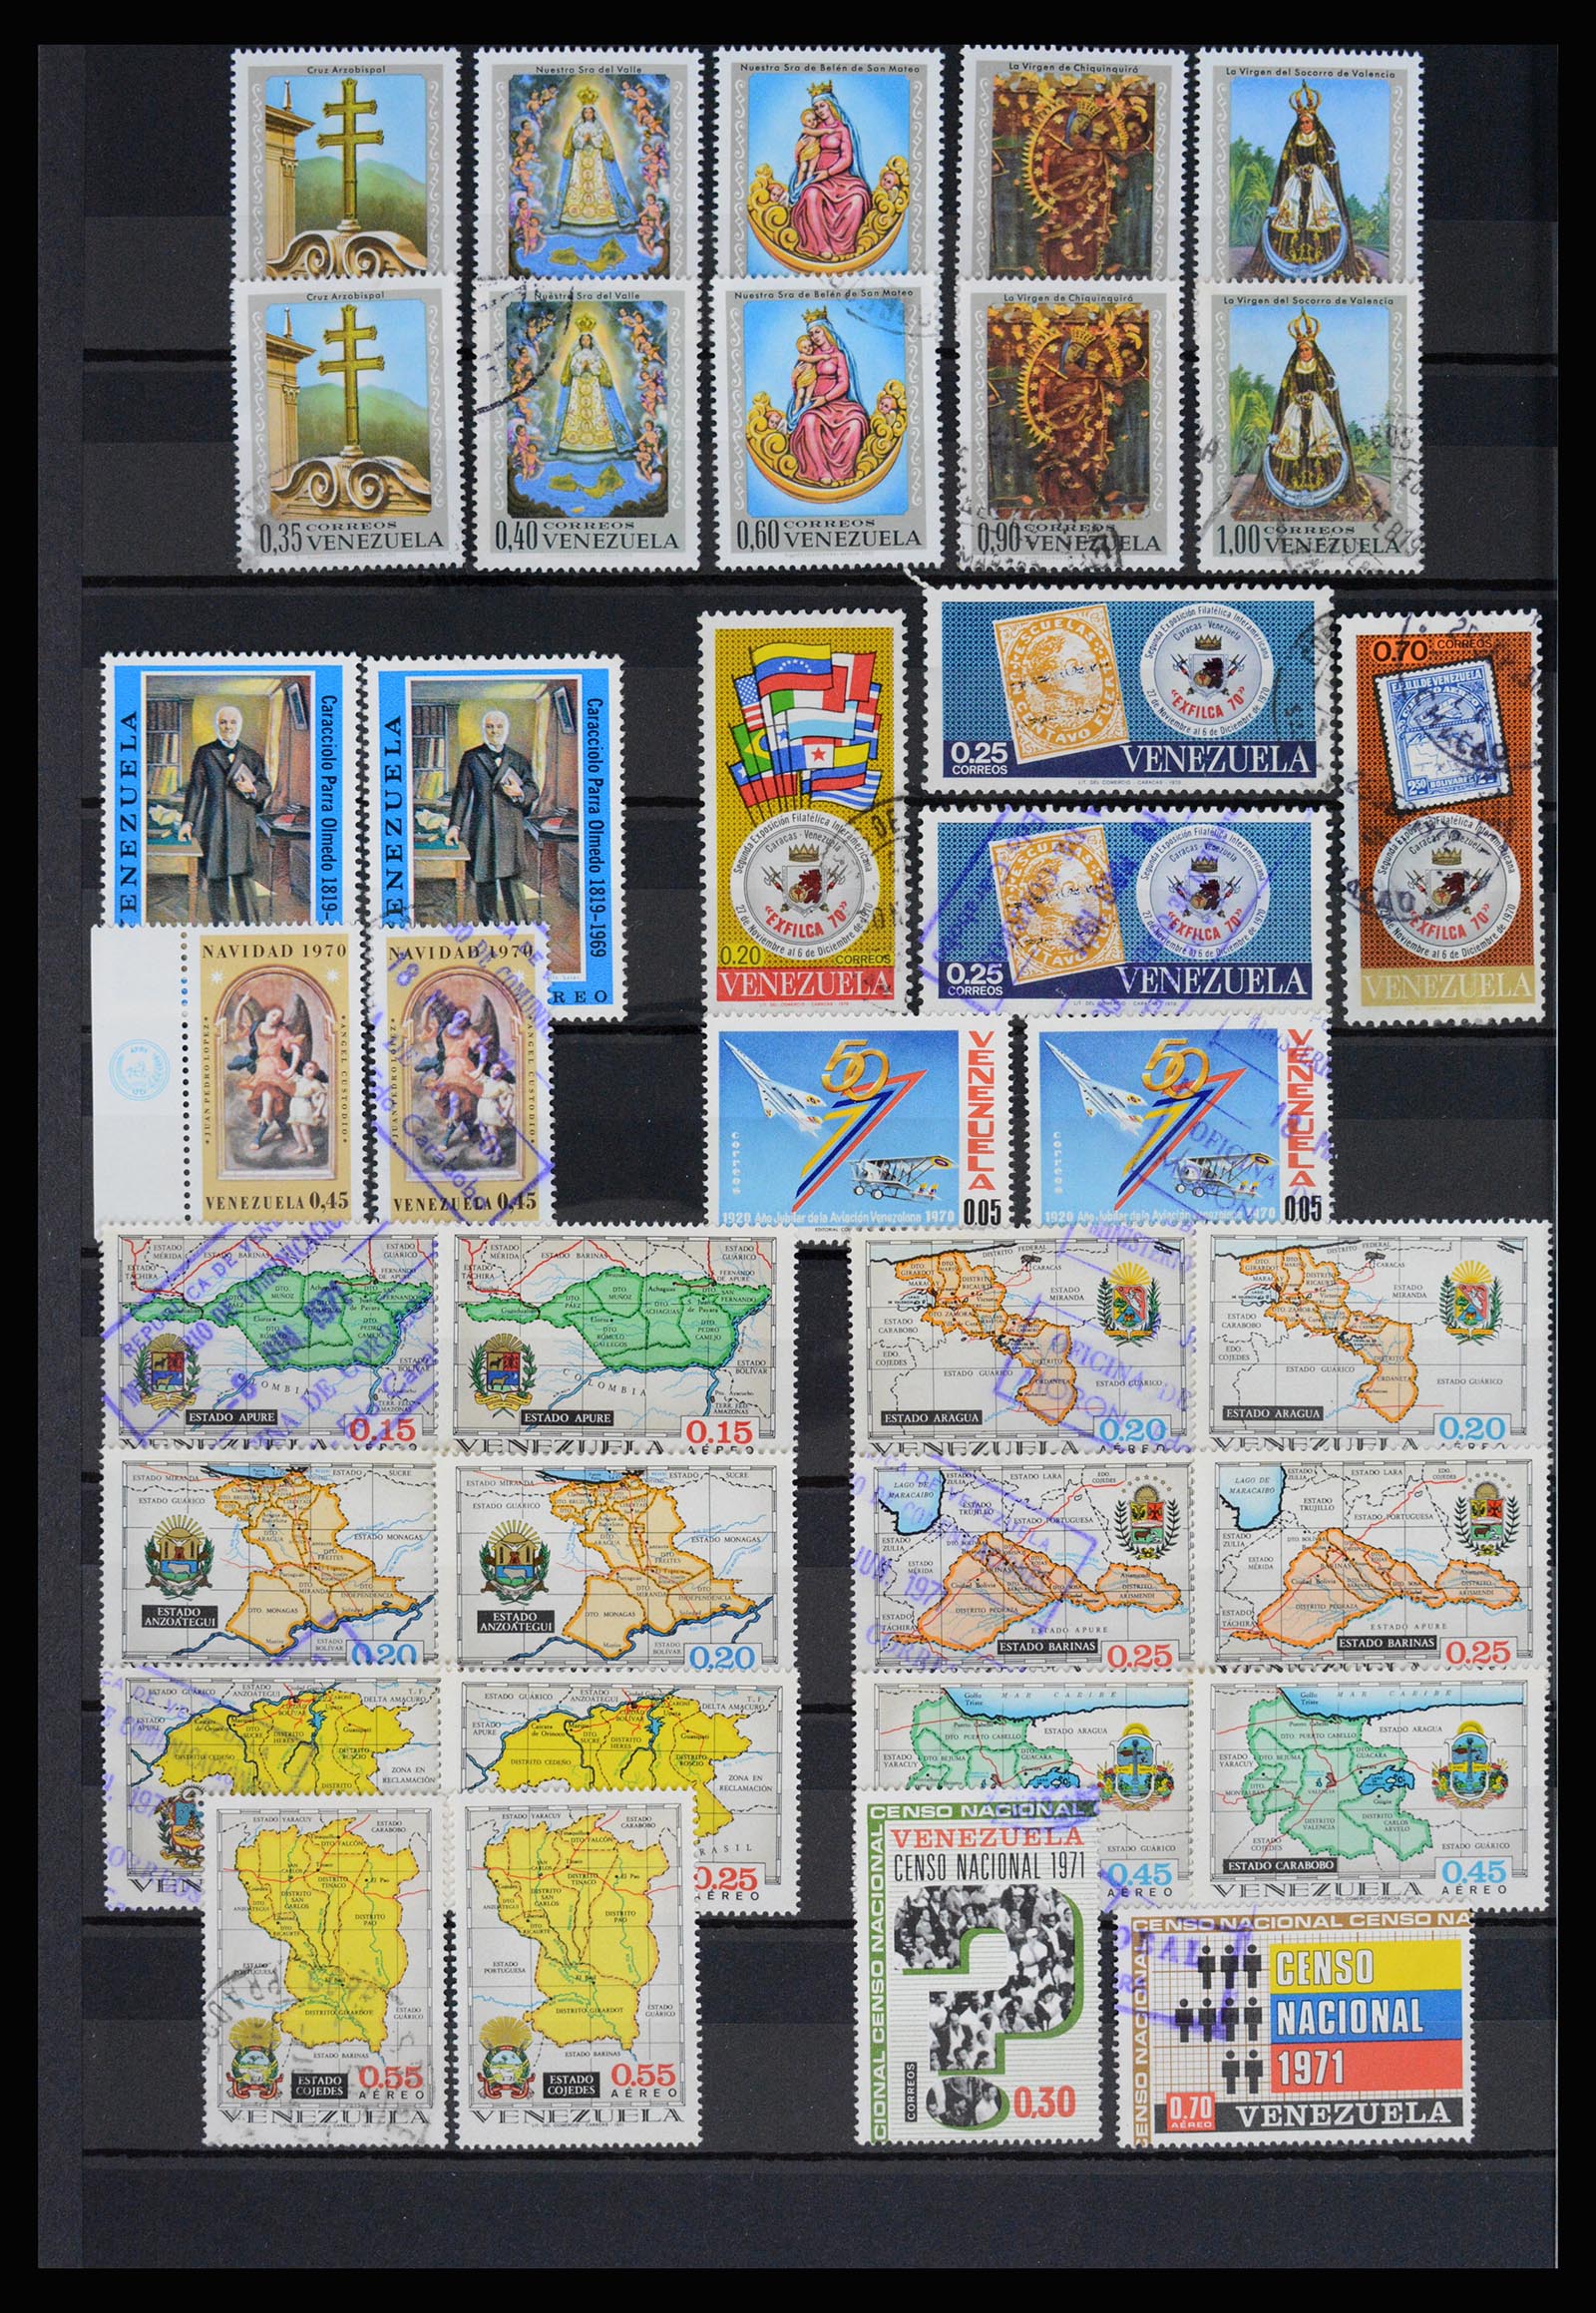 36987 059 - Stamp collection 36987 Venezuela 1860-1995.